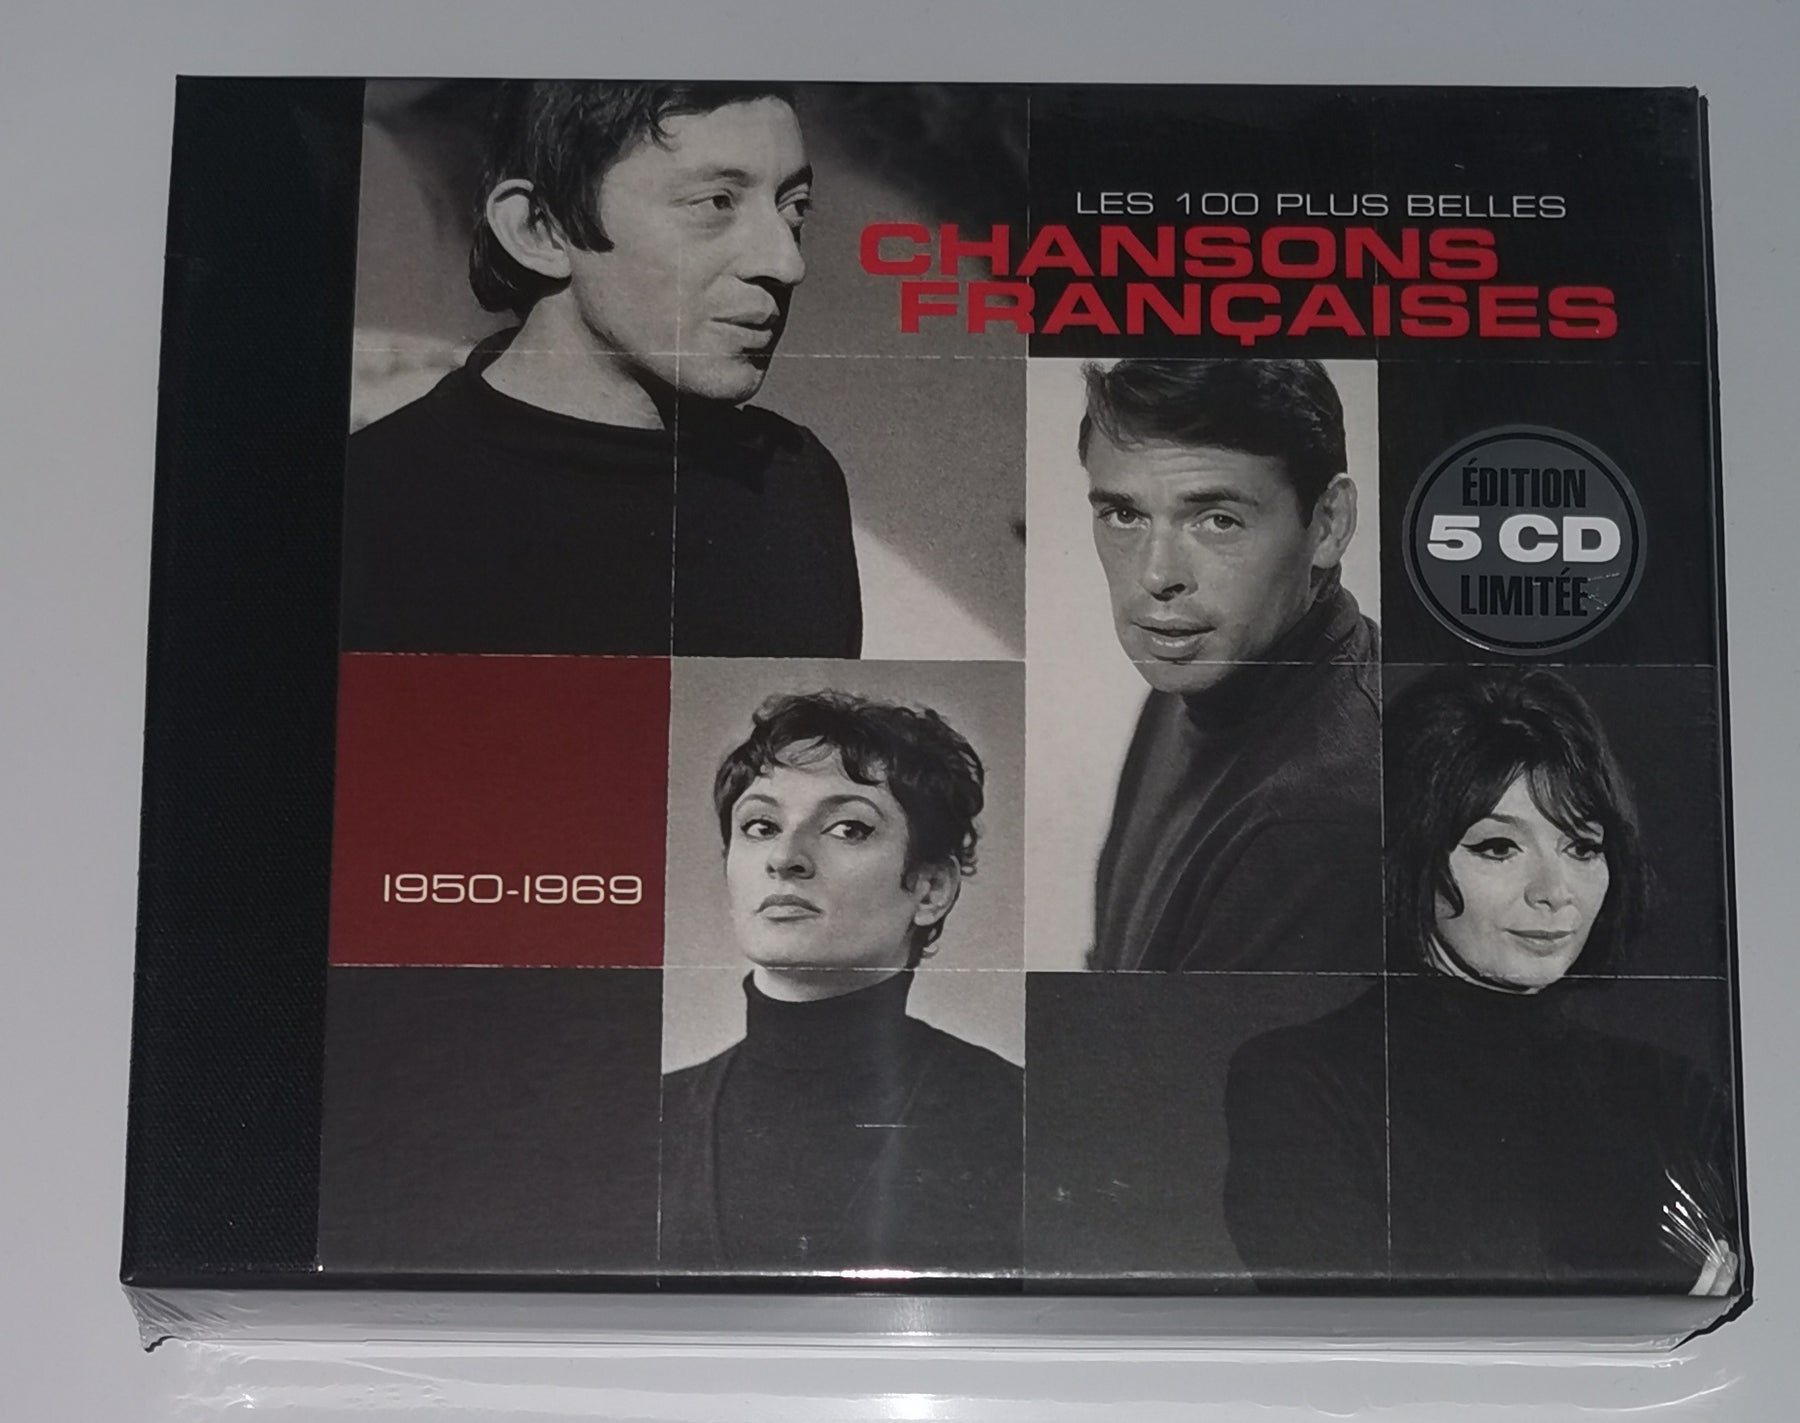 Chansons Francaises 19501969 (CD) [Neu]